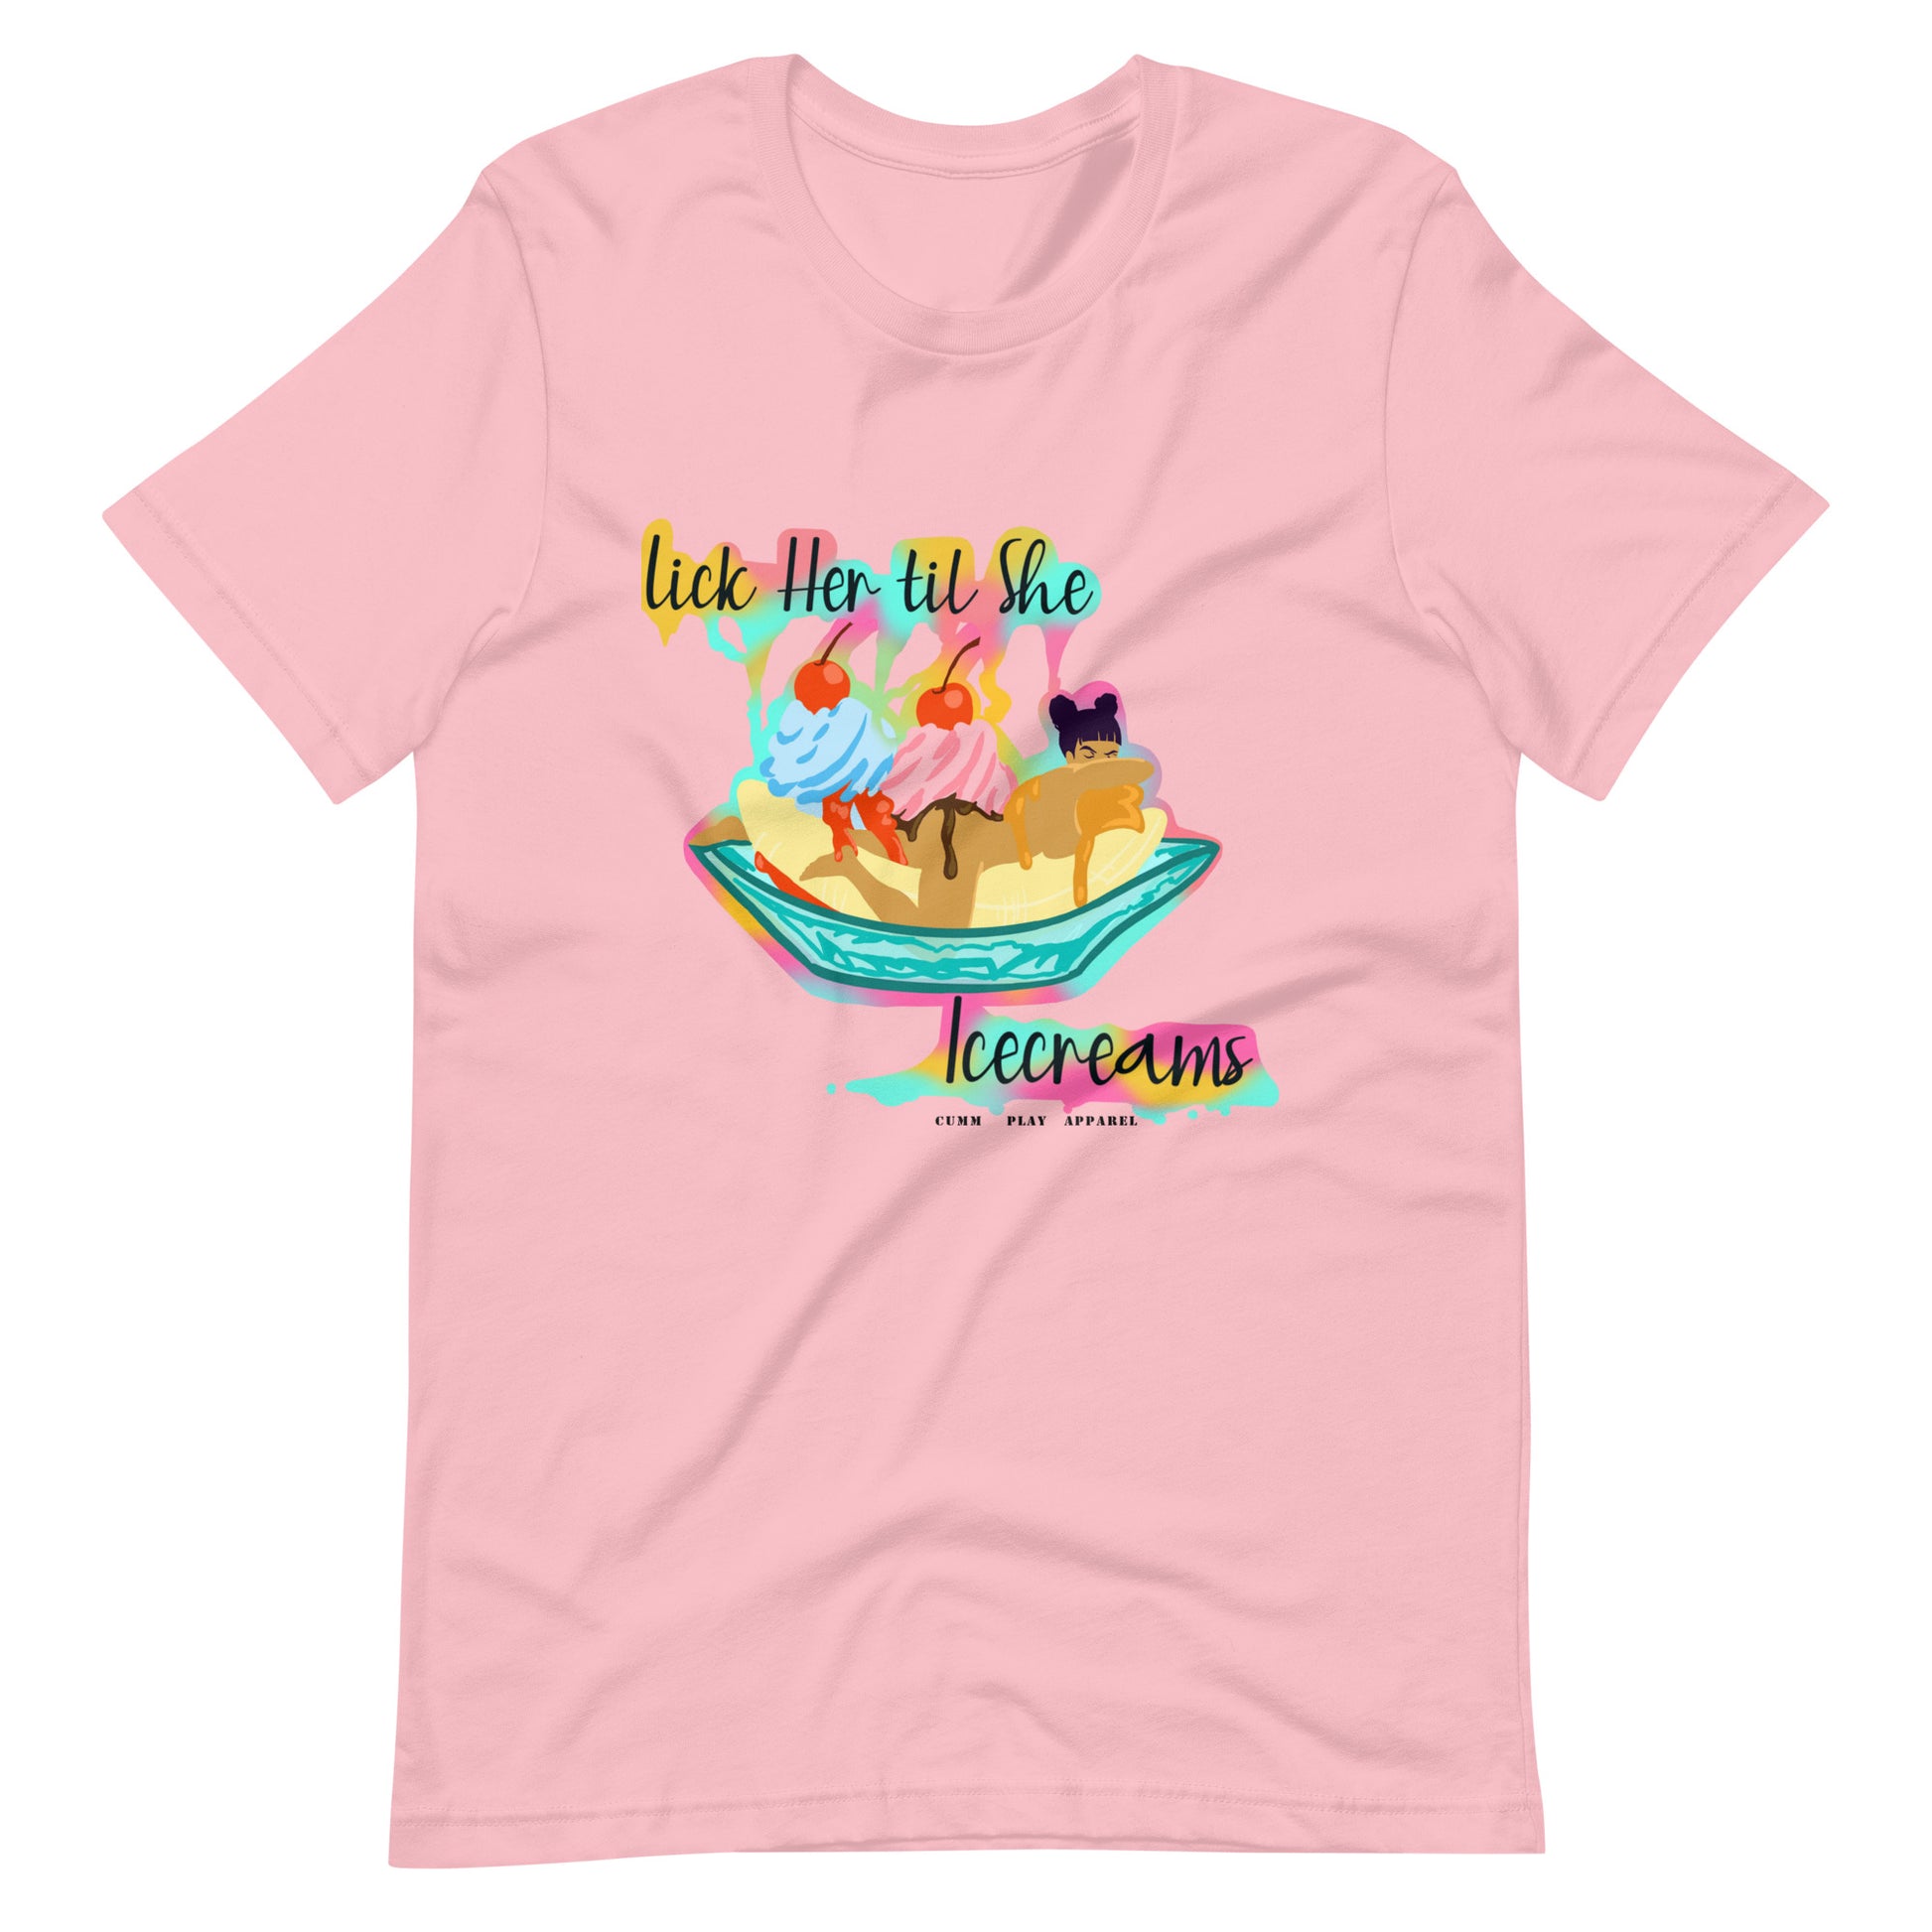 unisex-staple-t-shirt-pink-front-626328044706d.jpg